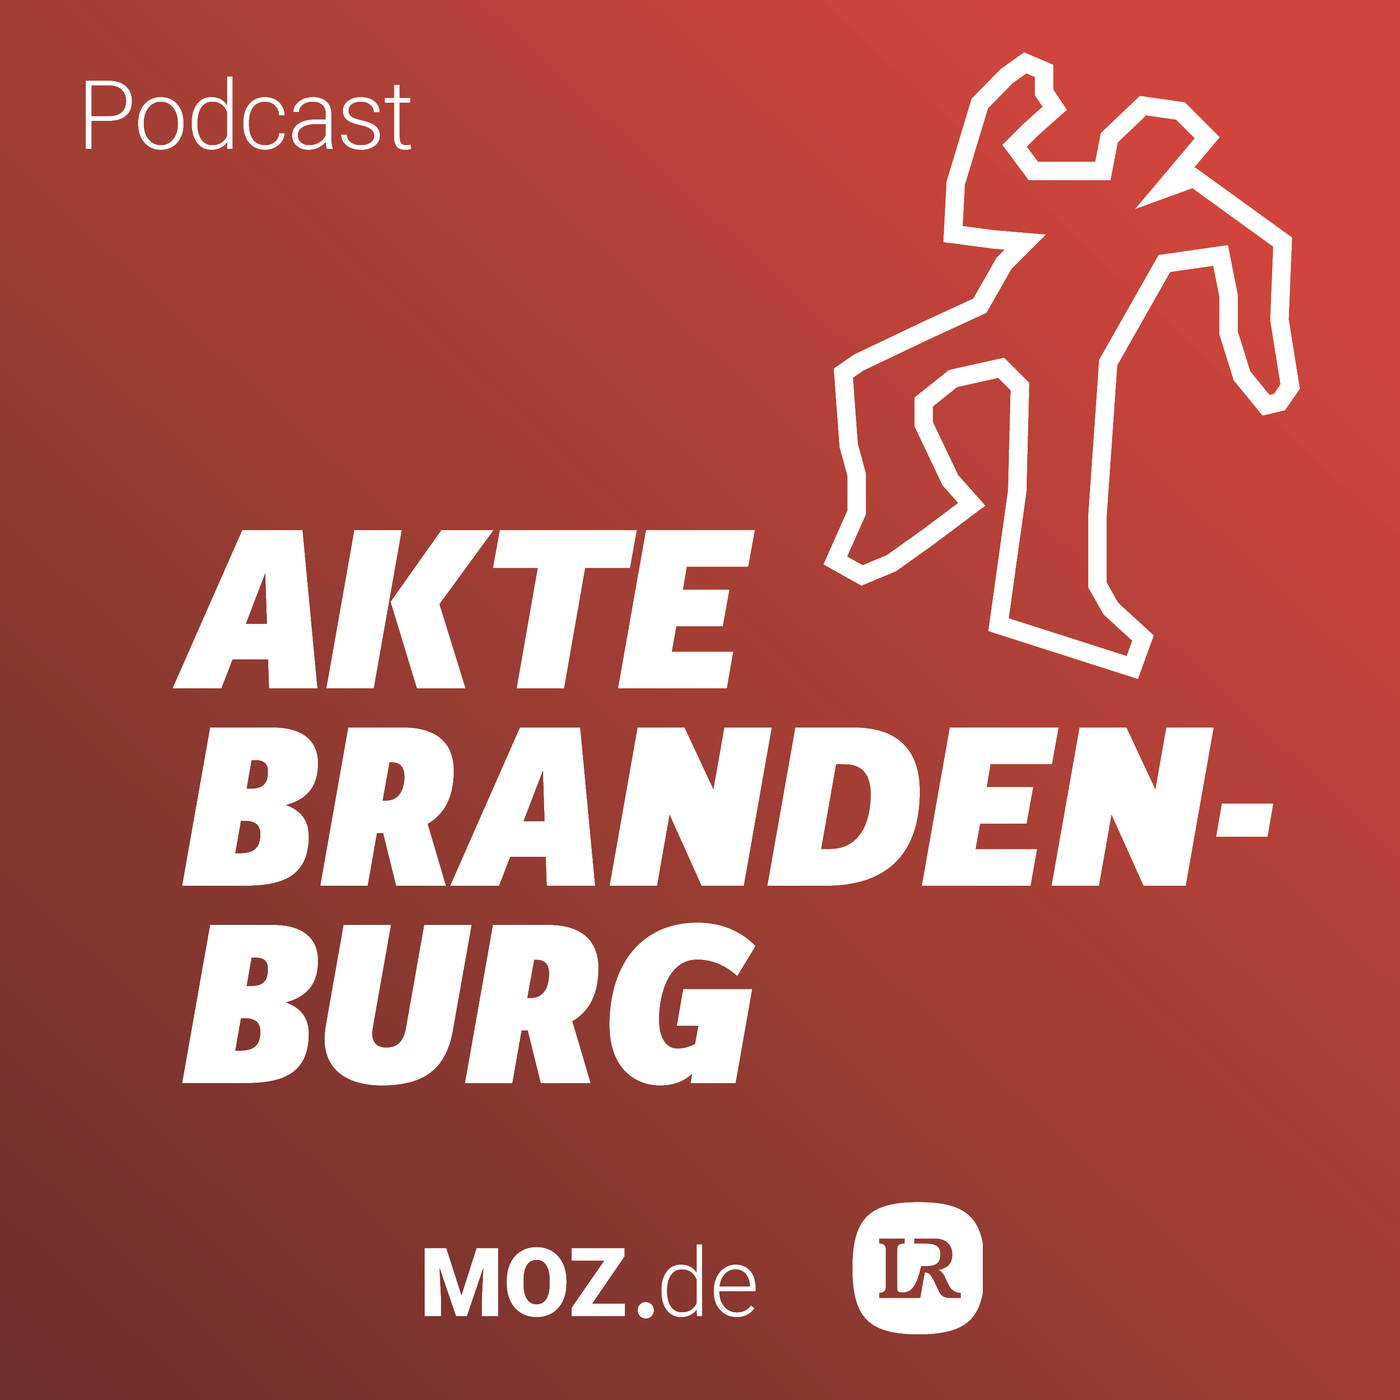 Folge 11 - Brandenburg statt Berlin: Autorennen, Verfolgungsjagd, Crash, tot